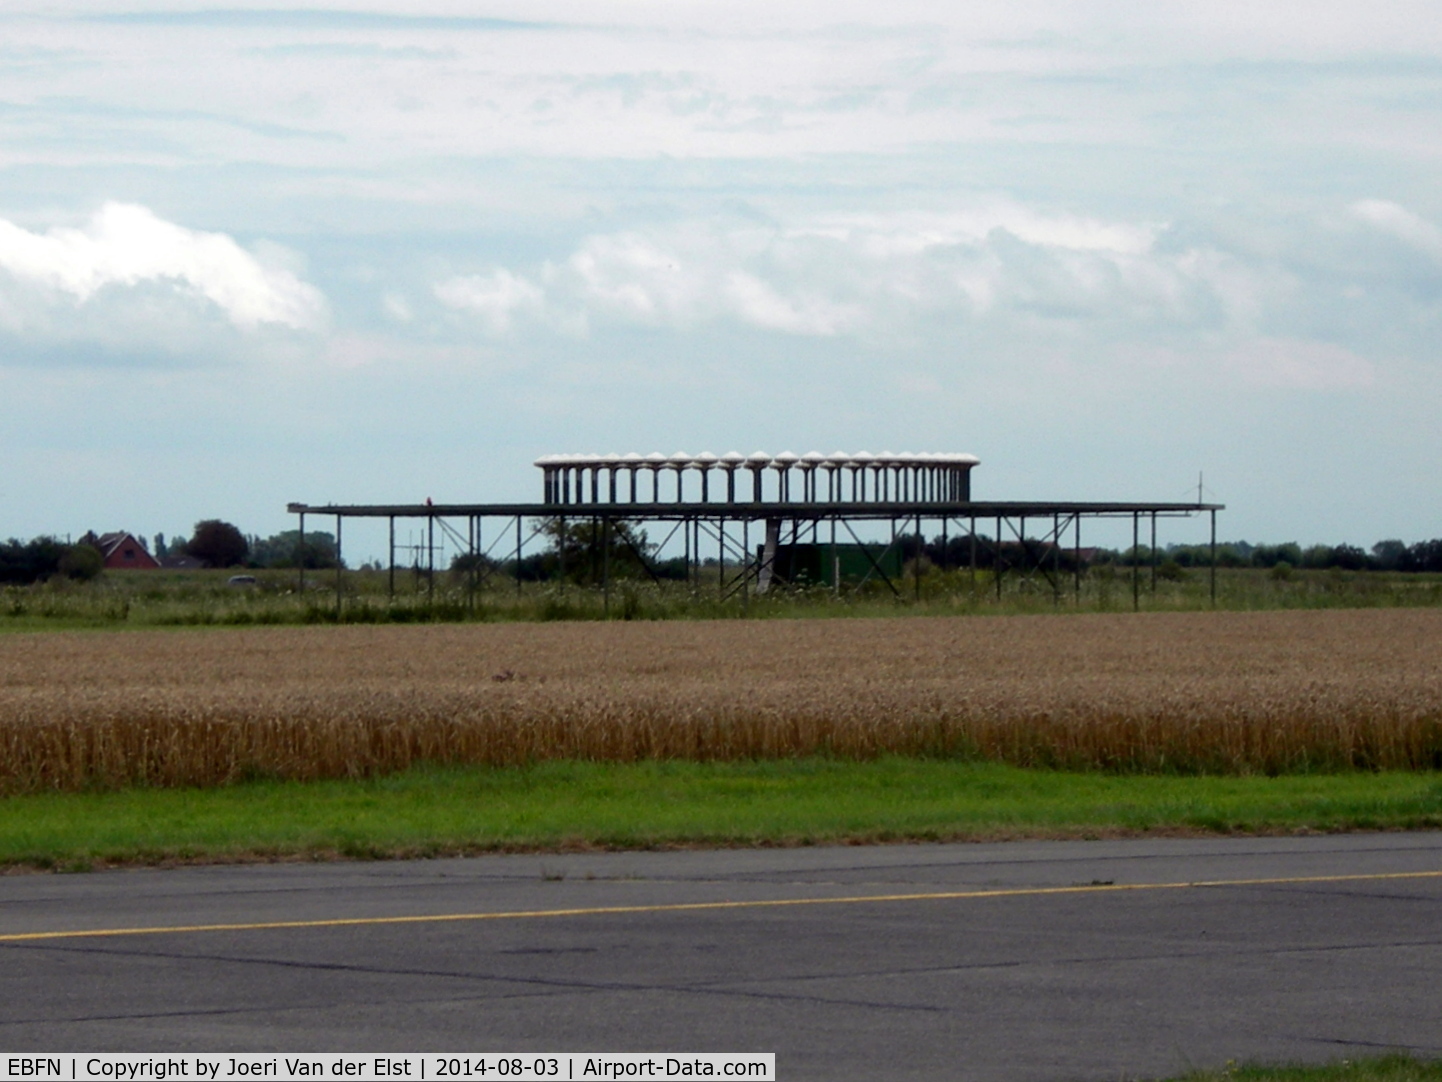 Koksijde AB Airport, Koksijde Belgium (EBFN) - Airport infrastructure